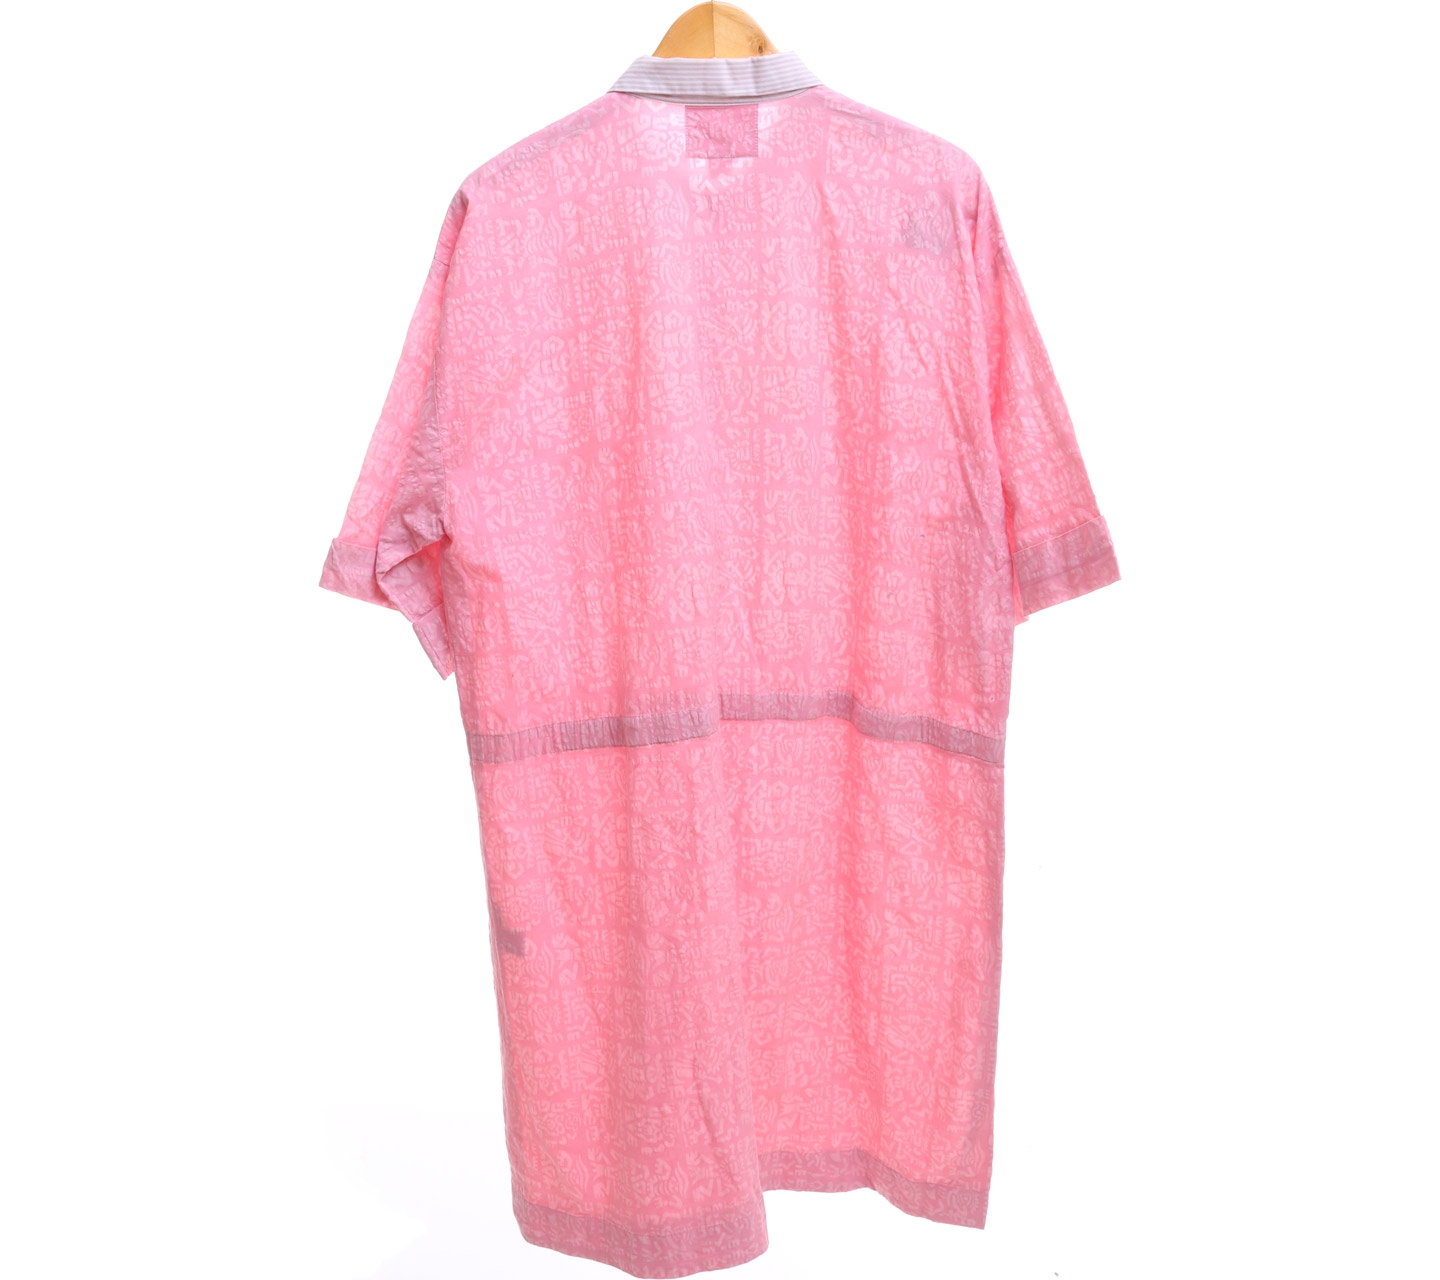 Geulis Pink Patterned Mini Dress